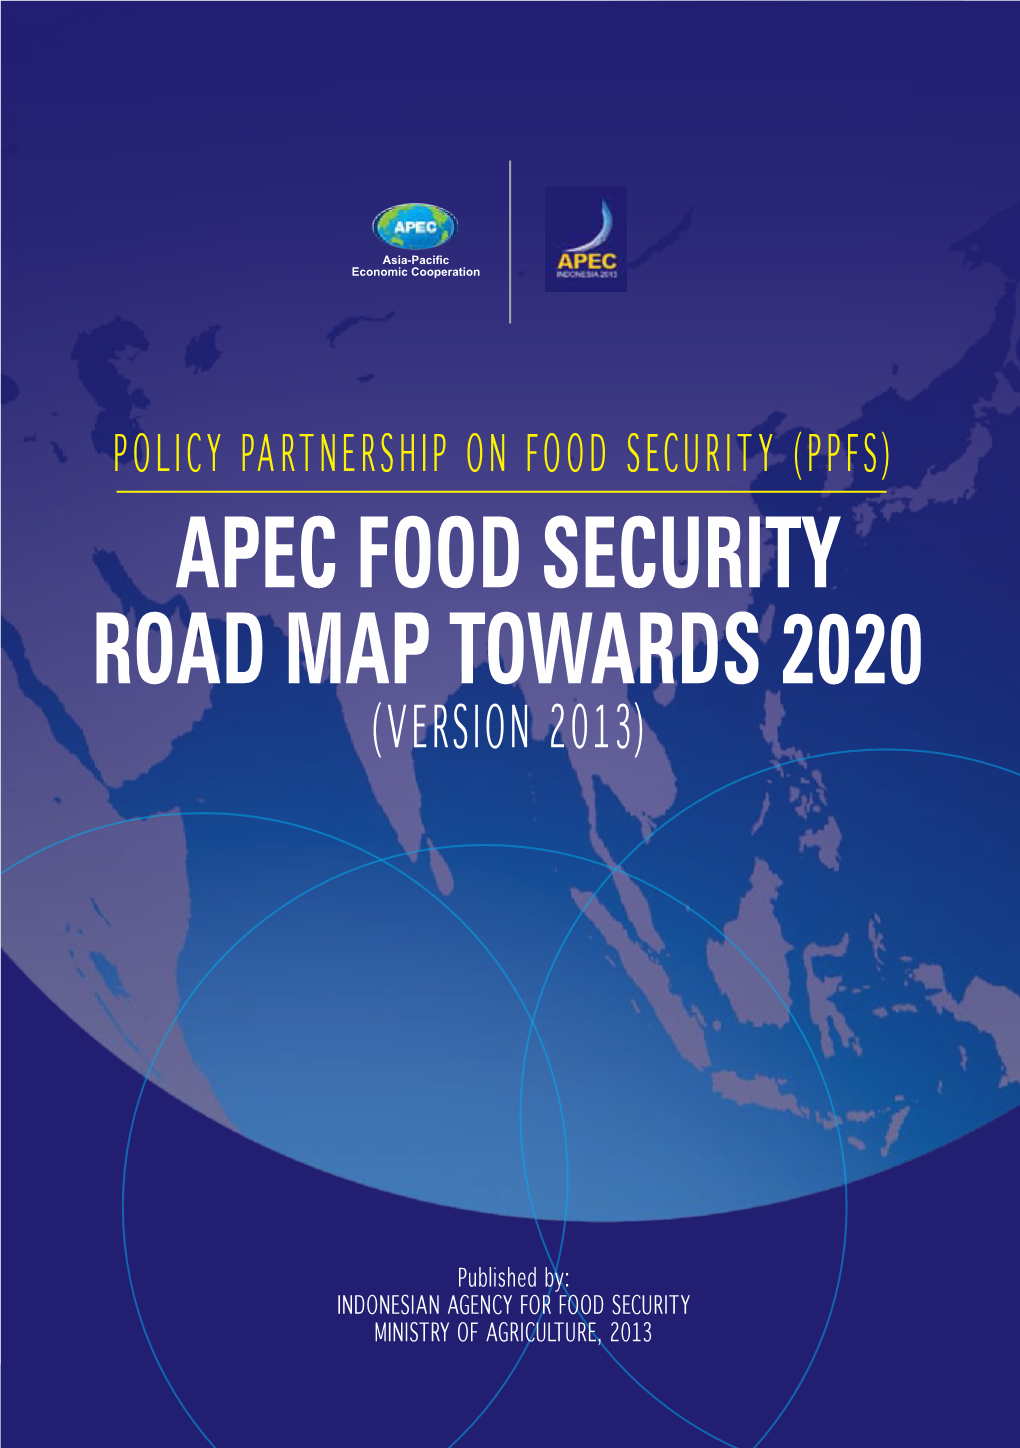 APEC FOOD SECURITY ROAD MAP TOWARDS 2020 (Version 2013)